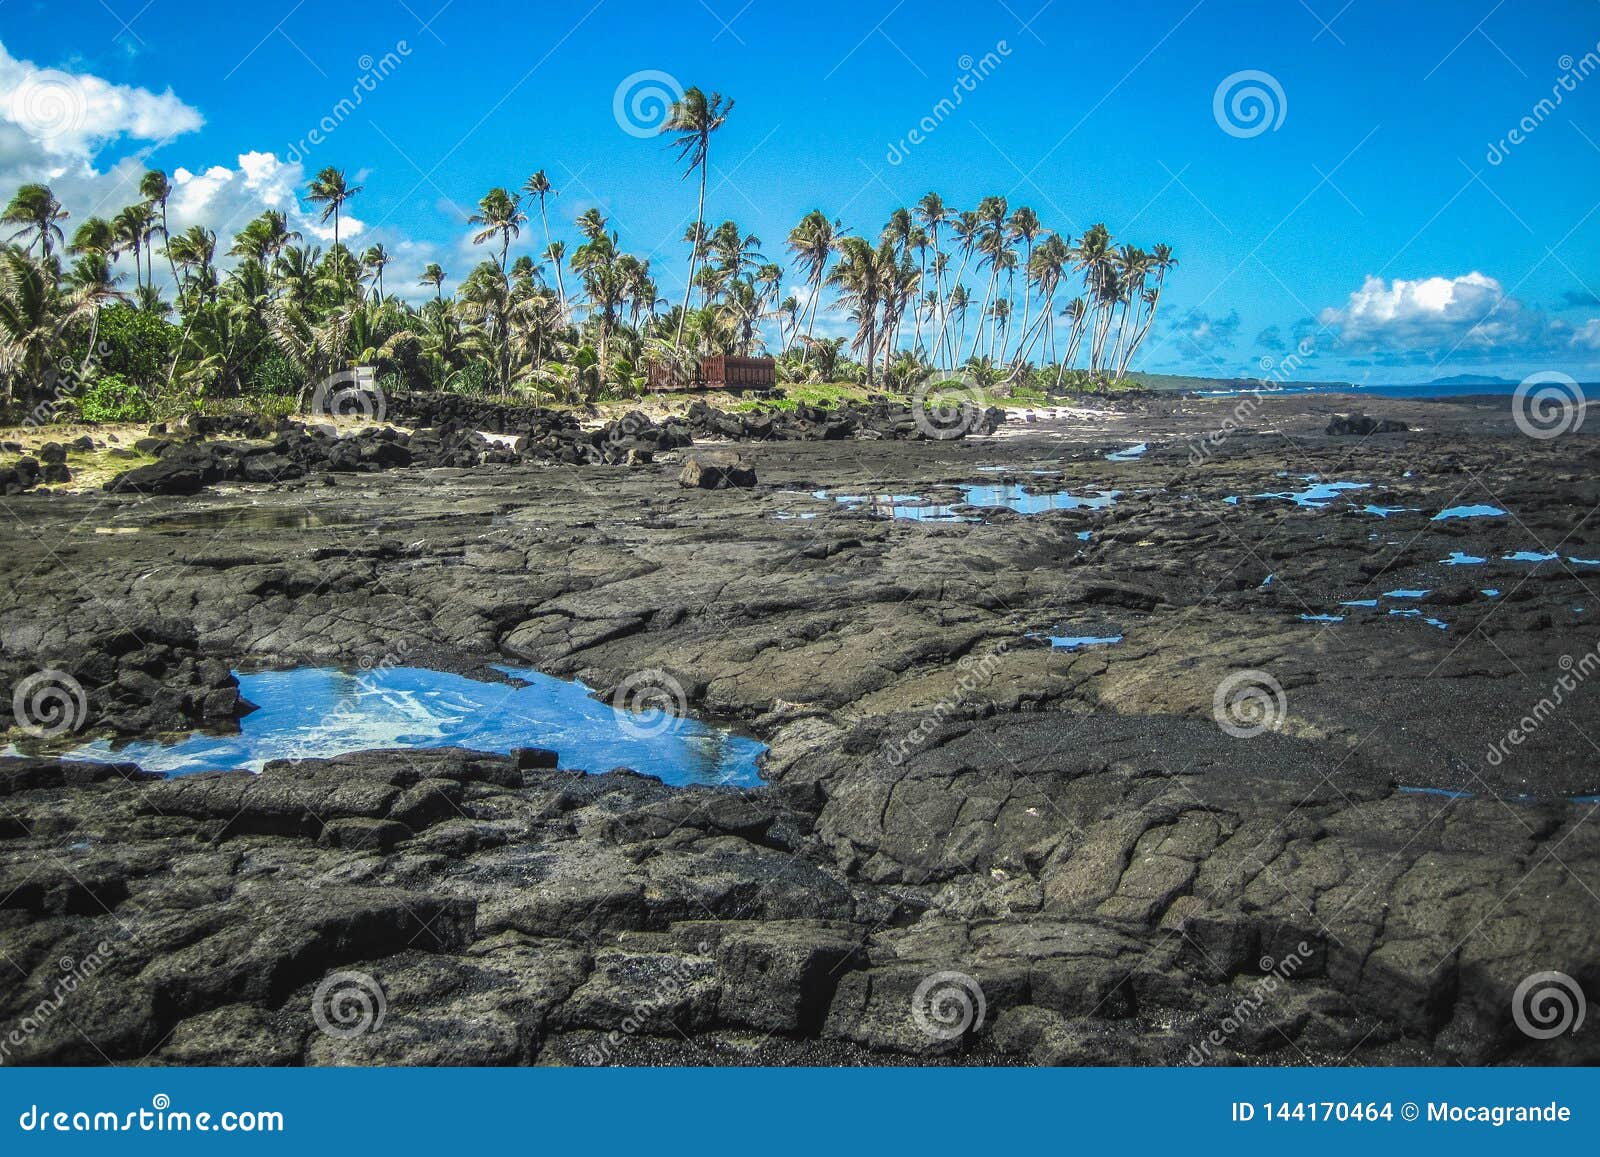 tropical island of samoa with saleaula lava field near blowholes